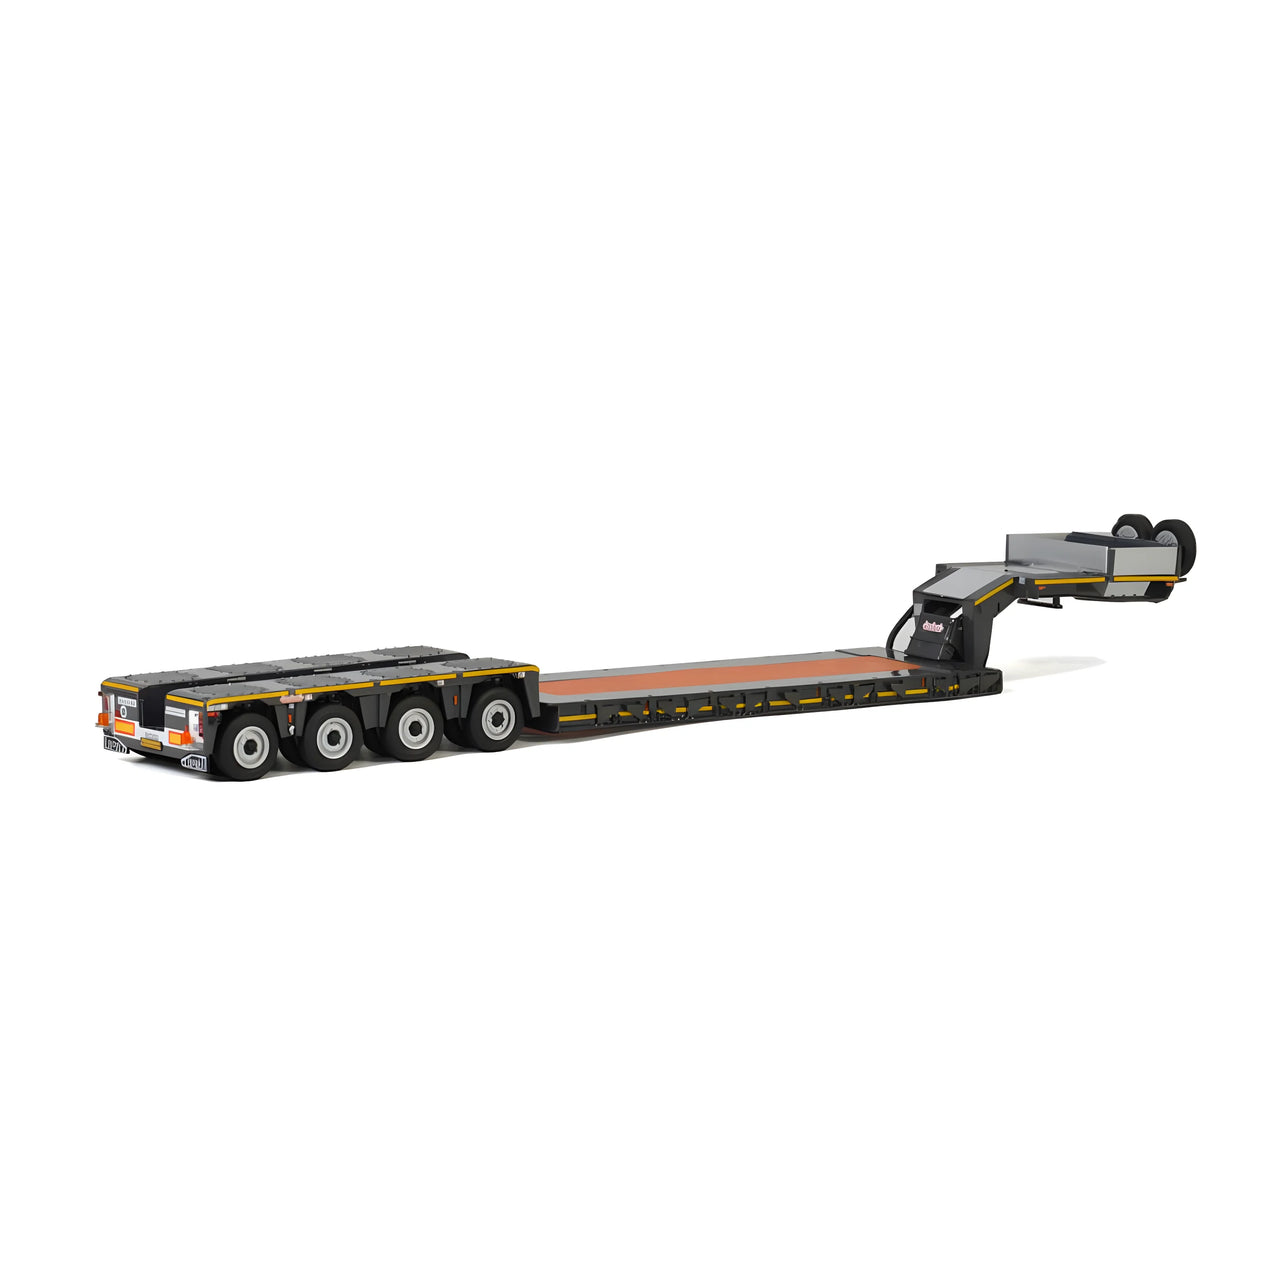 04-2081 Plataforma Lowboy 4-Axle Escala 1:50 (Modelo Descontinuado)